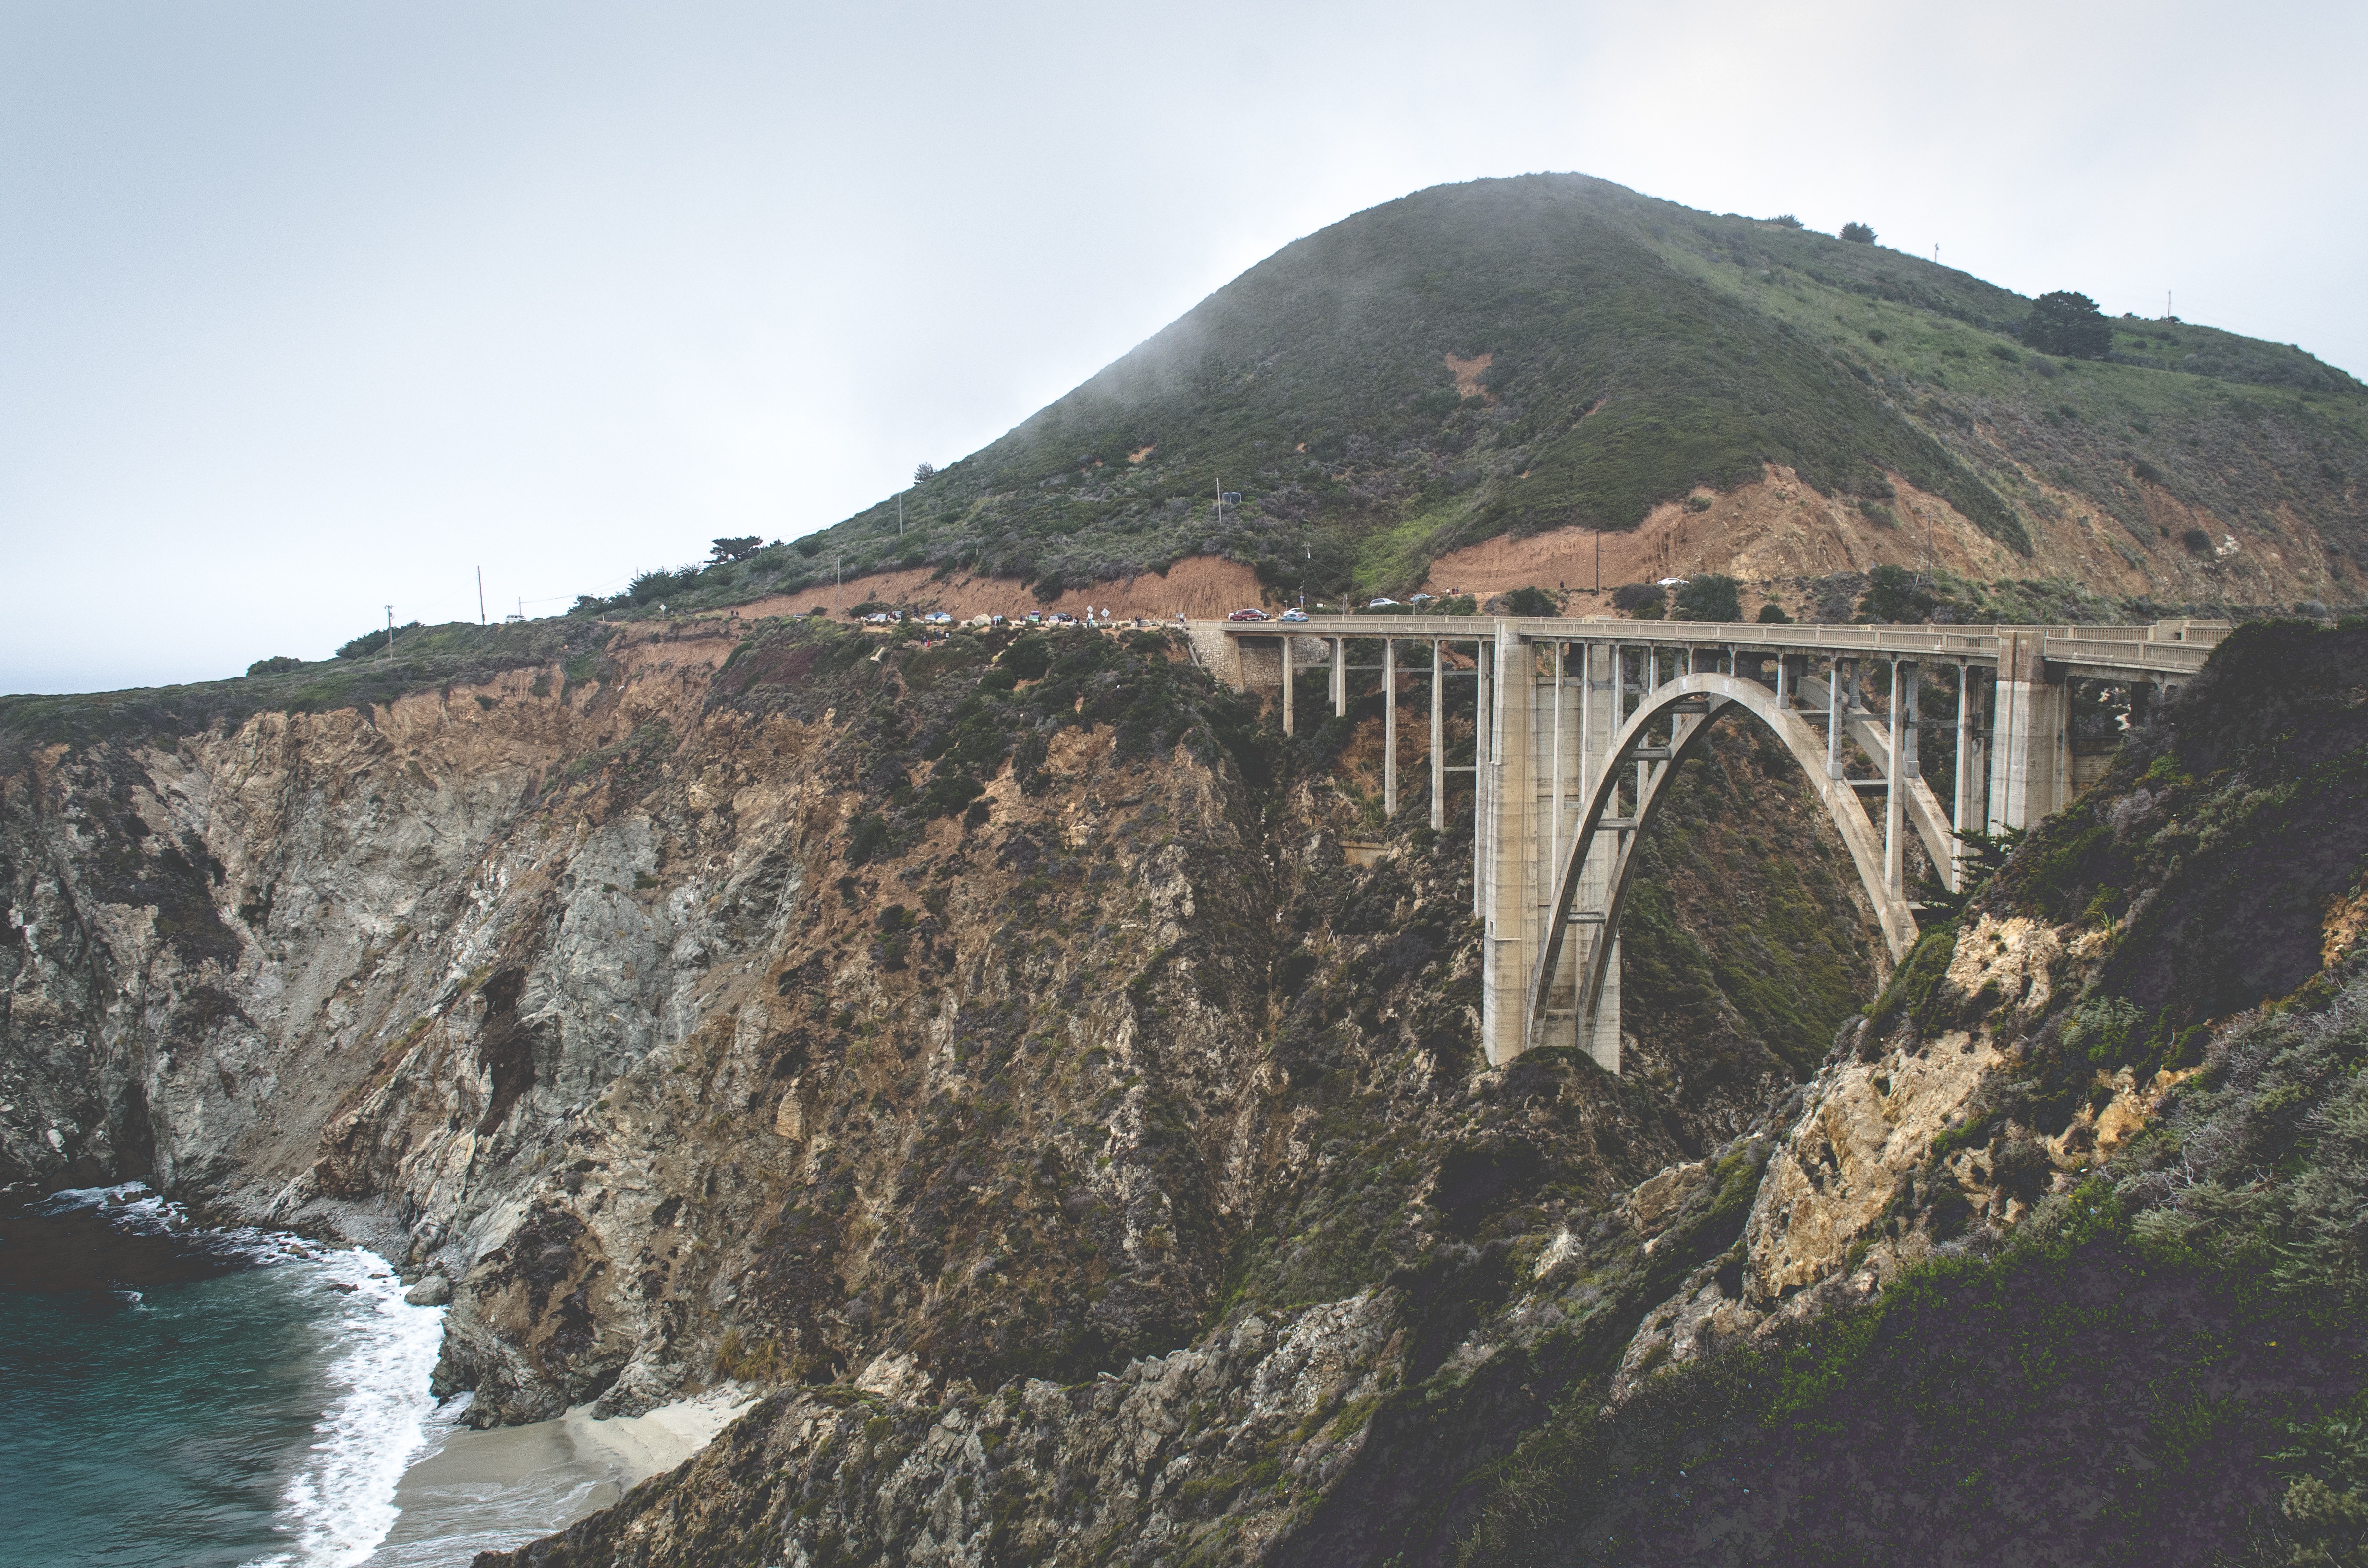 A large bridge over a gorge on the seashore